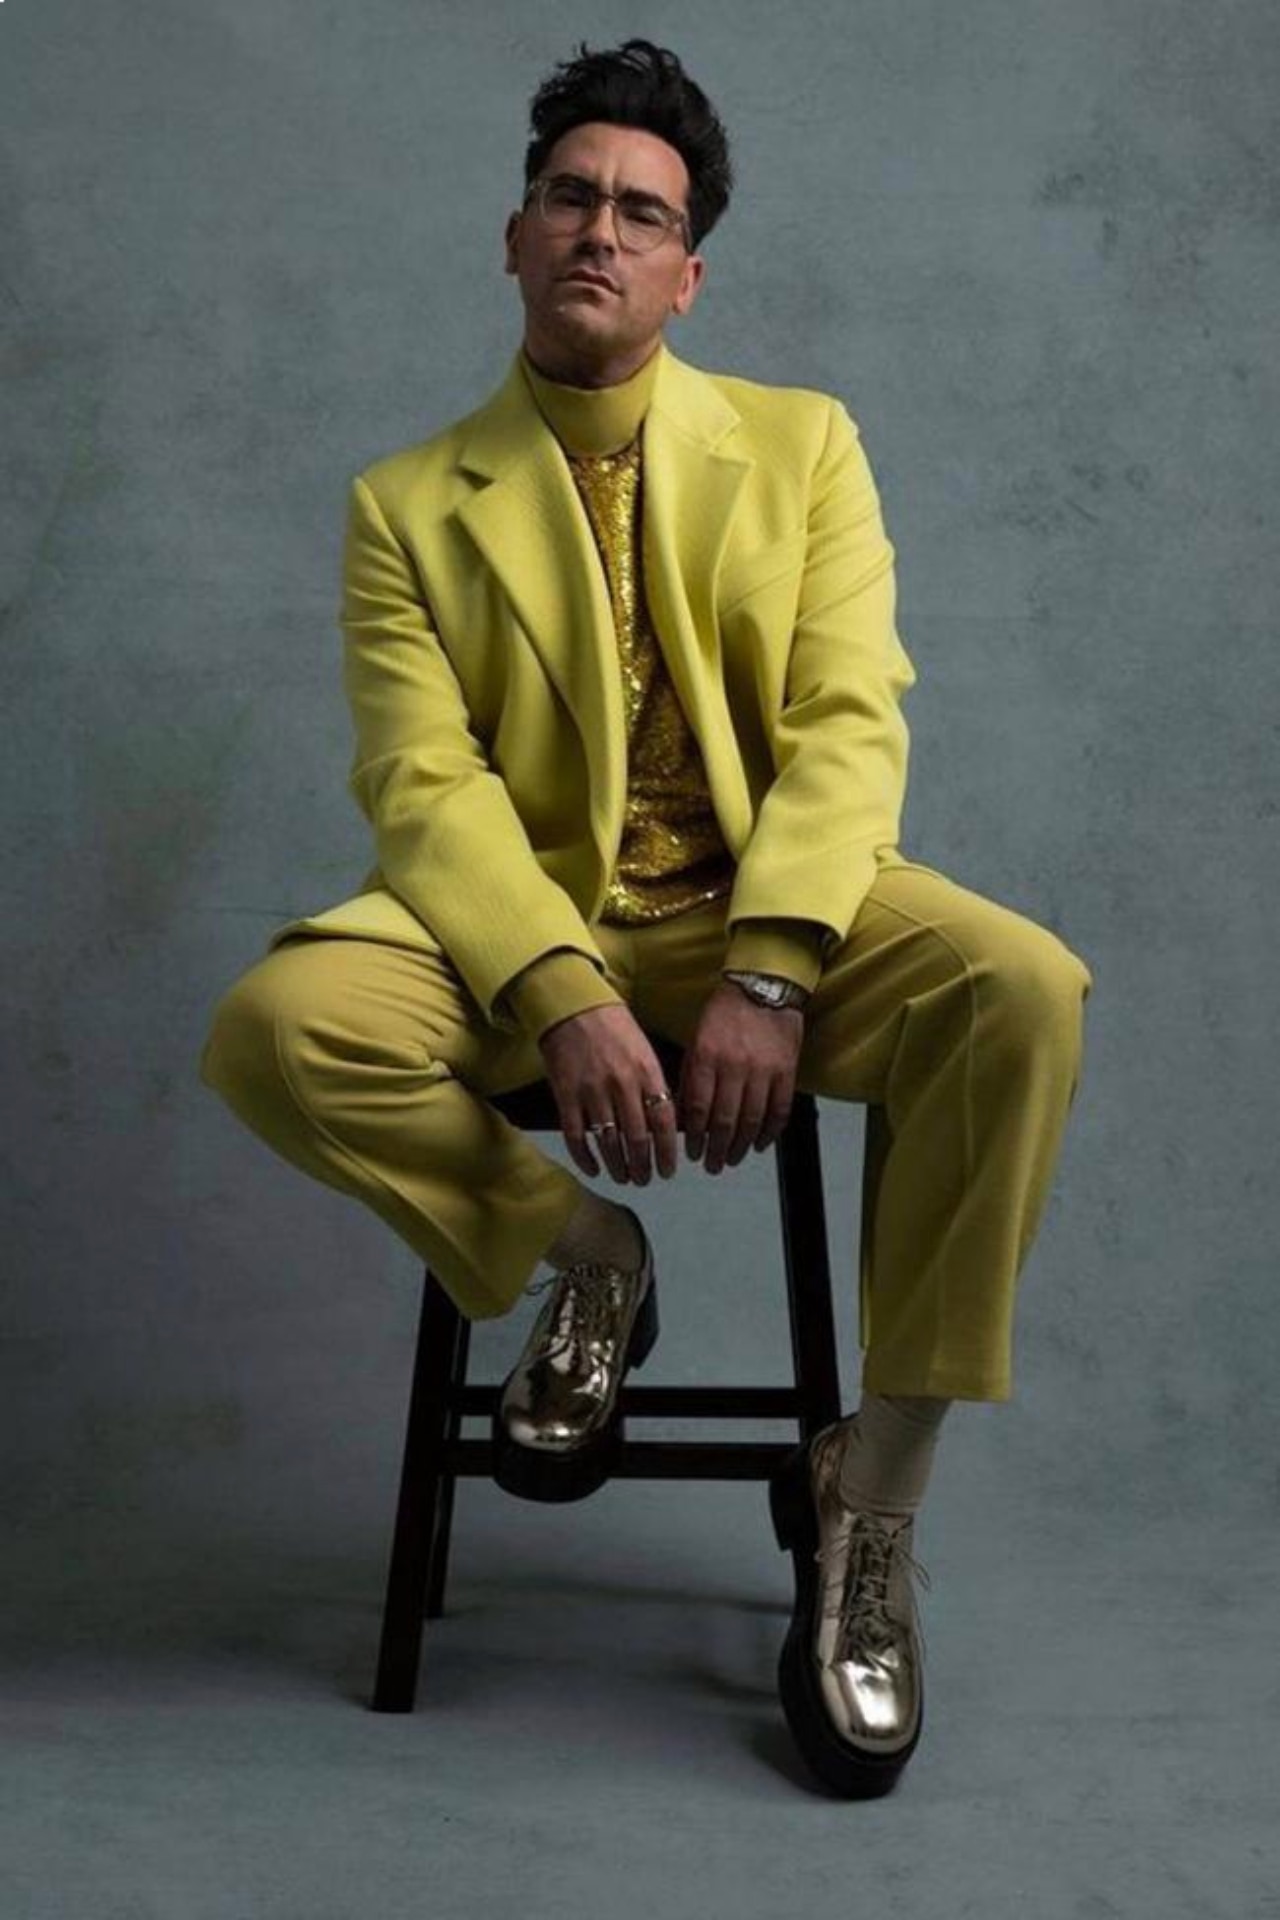 Timothée Chalamet's Golden Globes Look Is the Future of Menswear